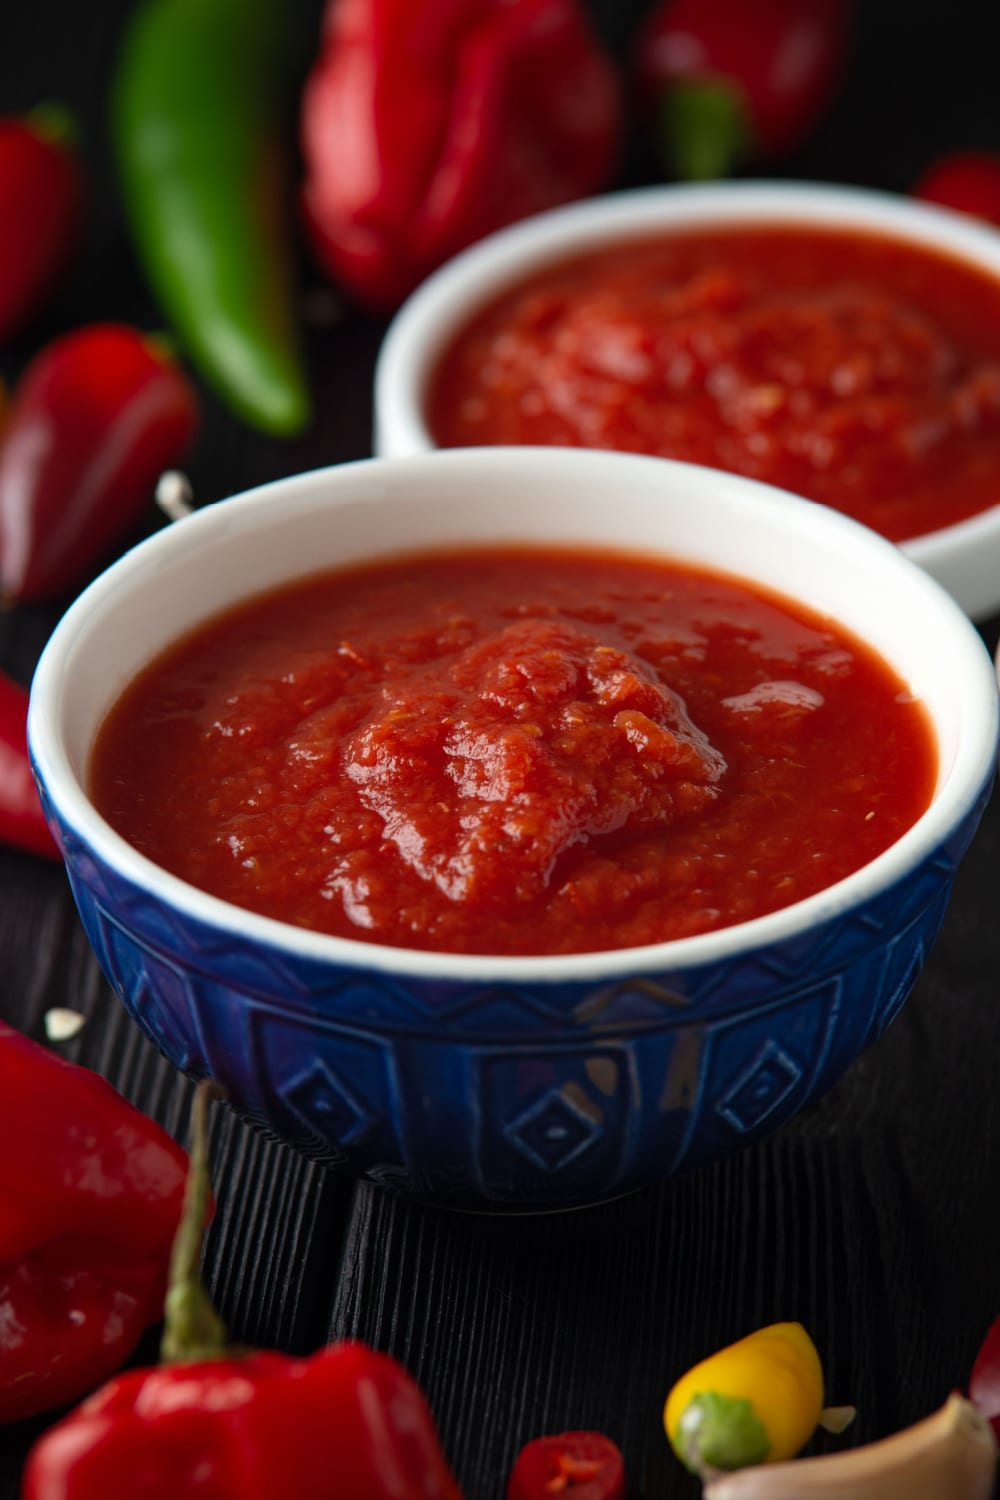 Closeup view of bowl of chili sauce